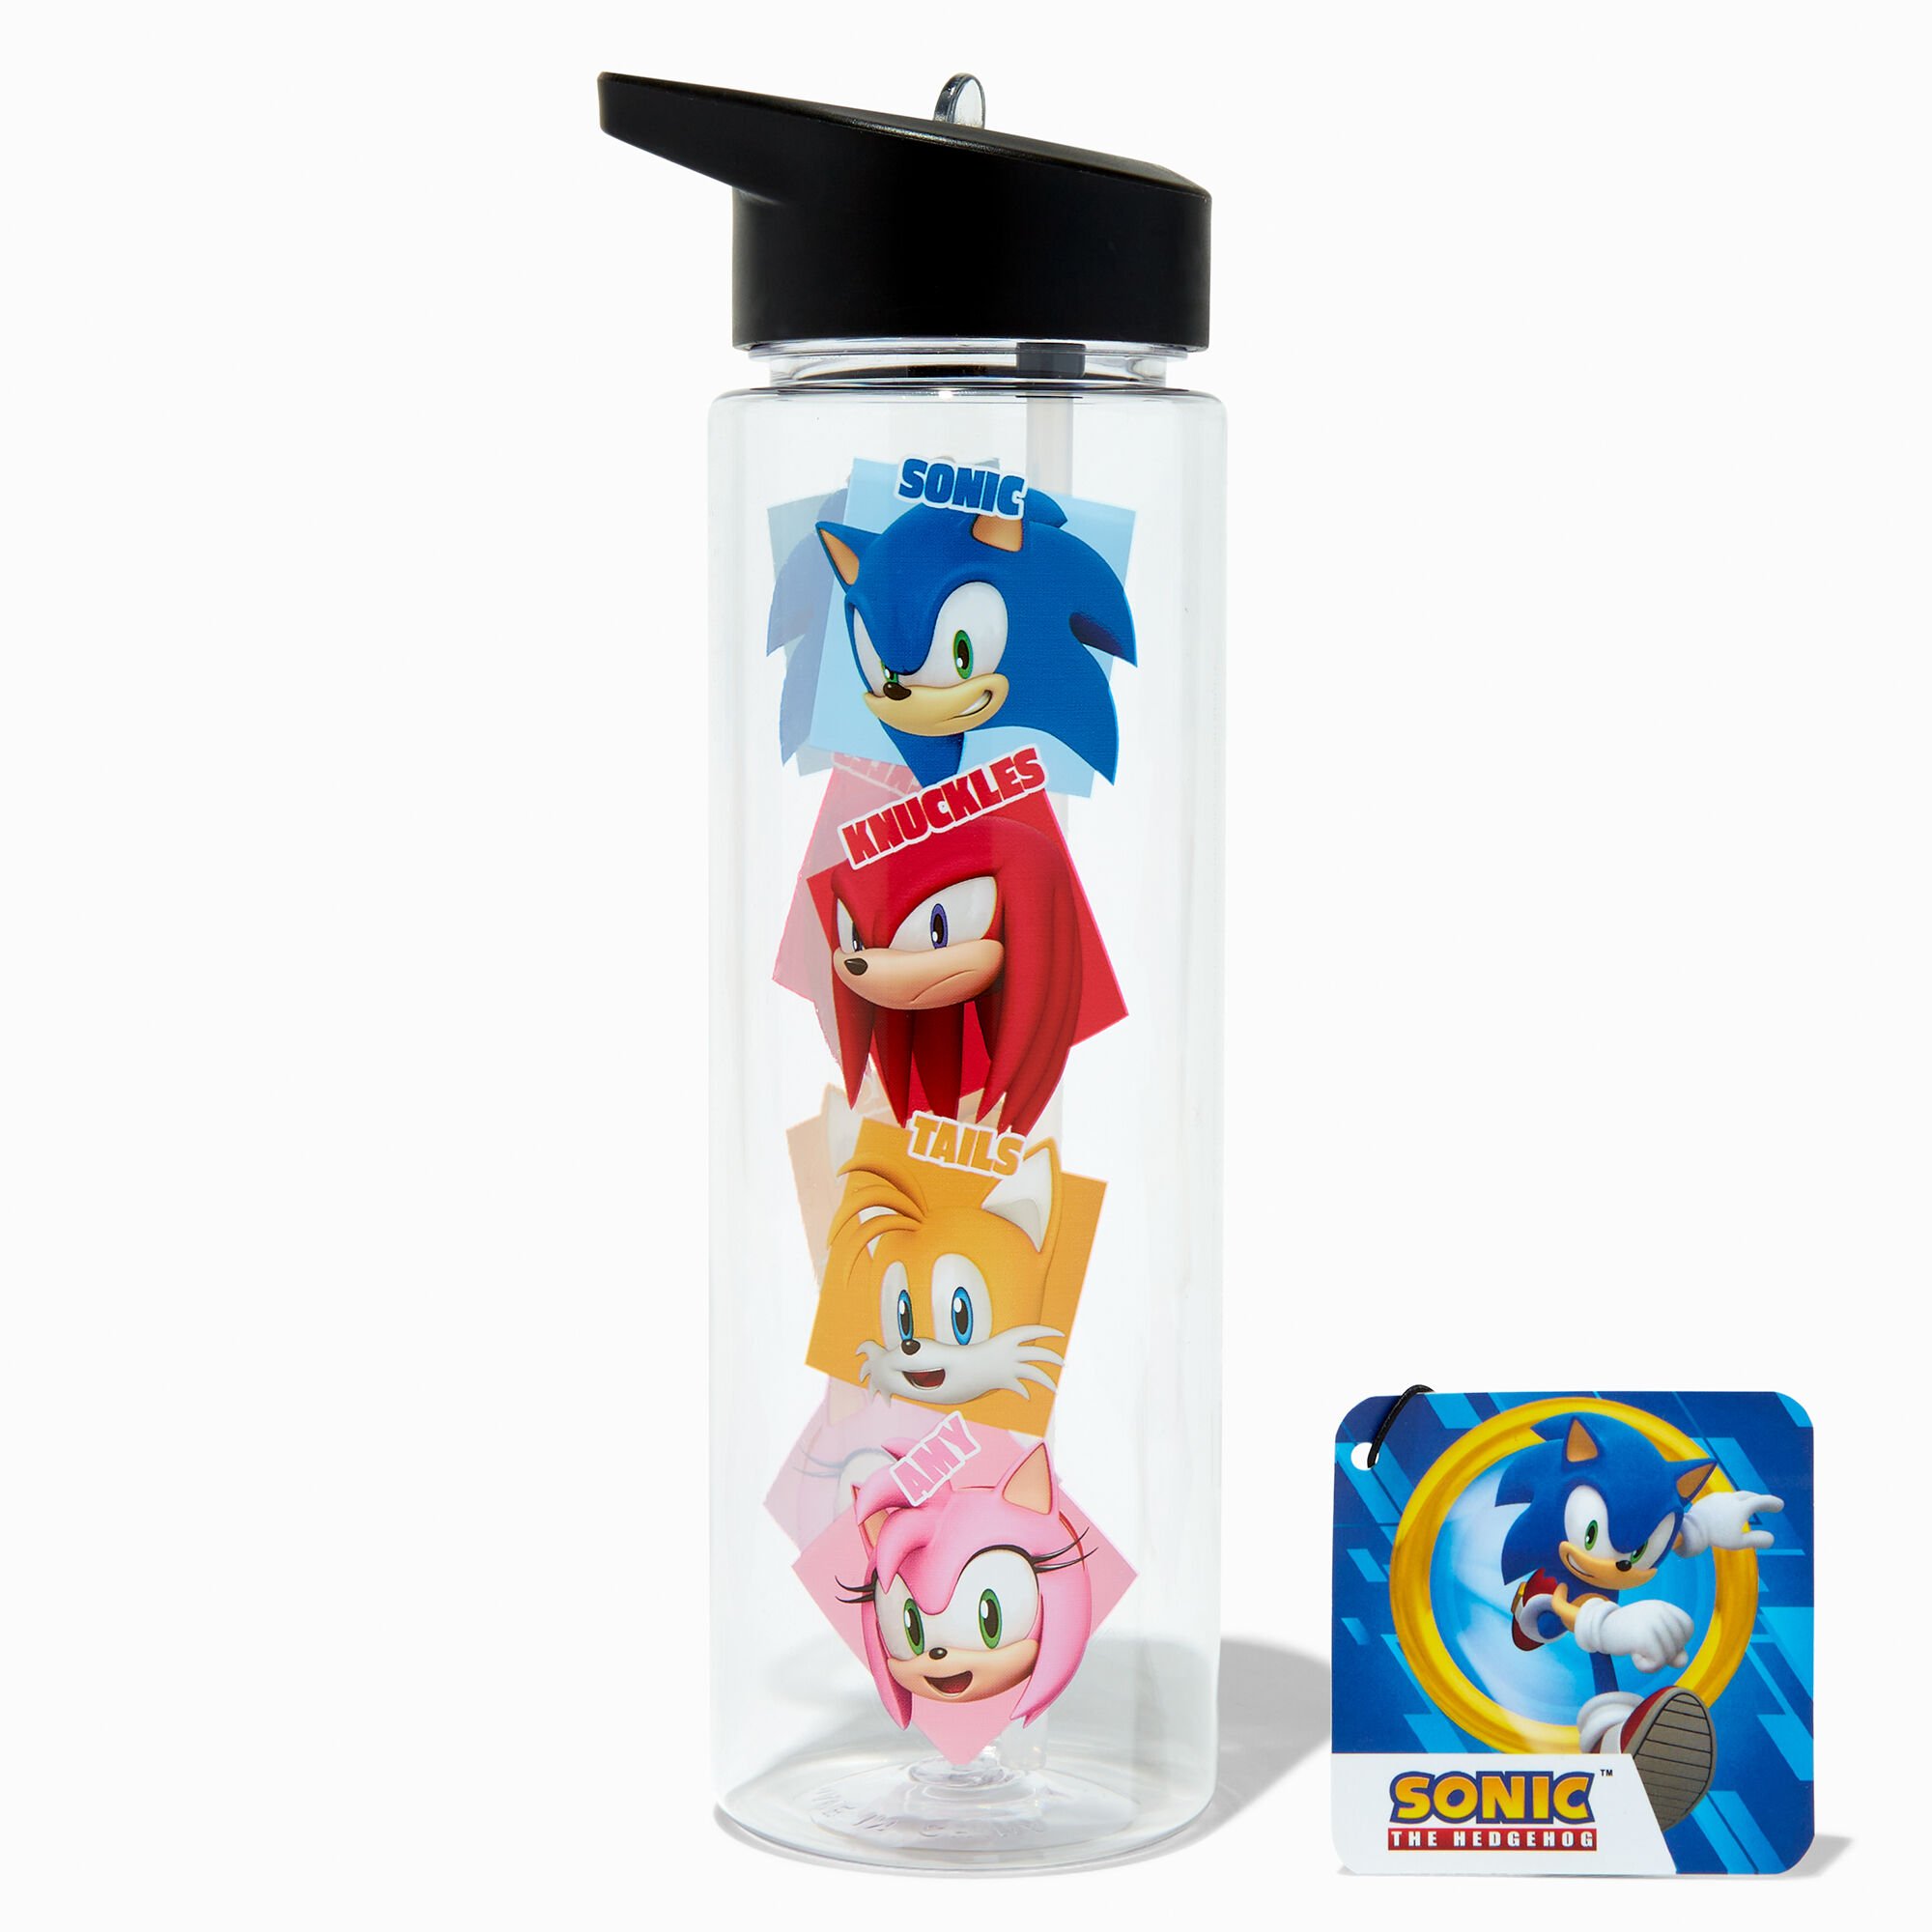 20 Sonic Hedgehog 2 x 4 Water Bottle Label Sticker Party Favor